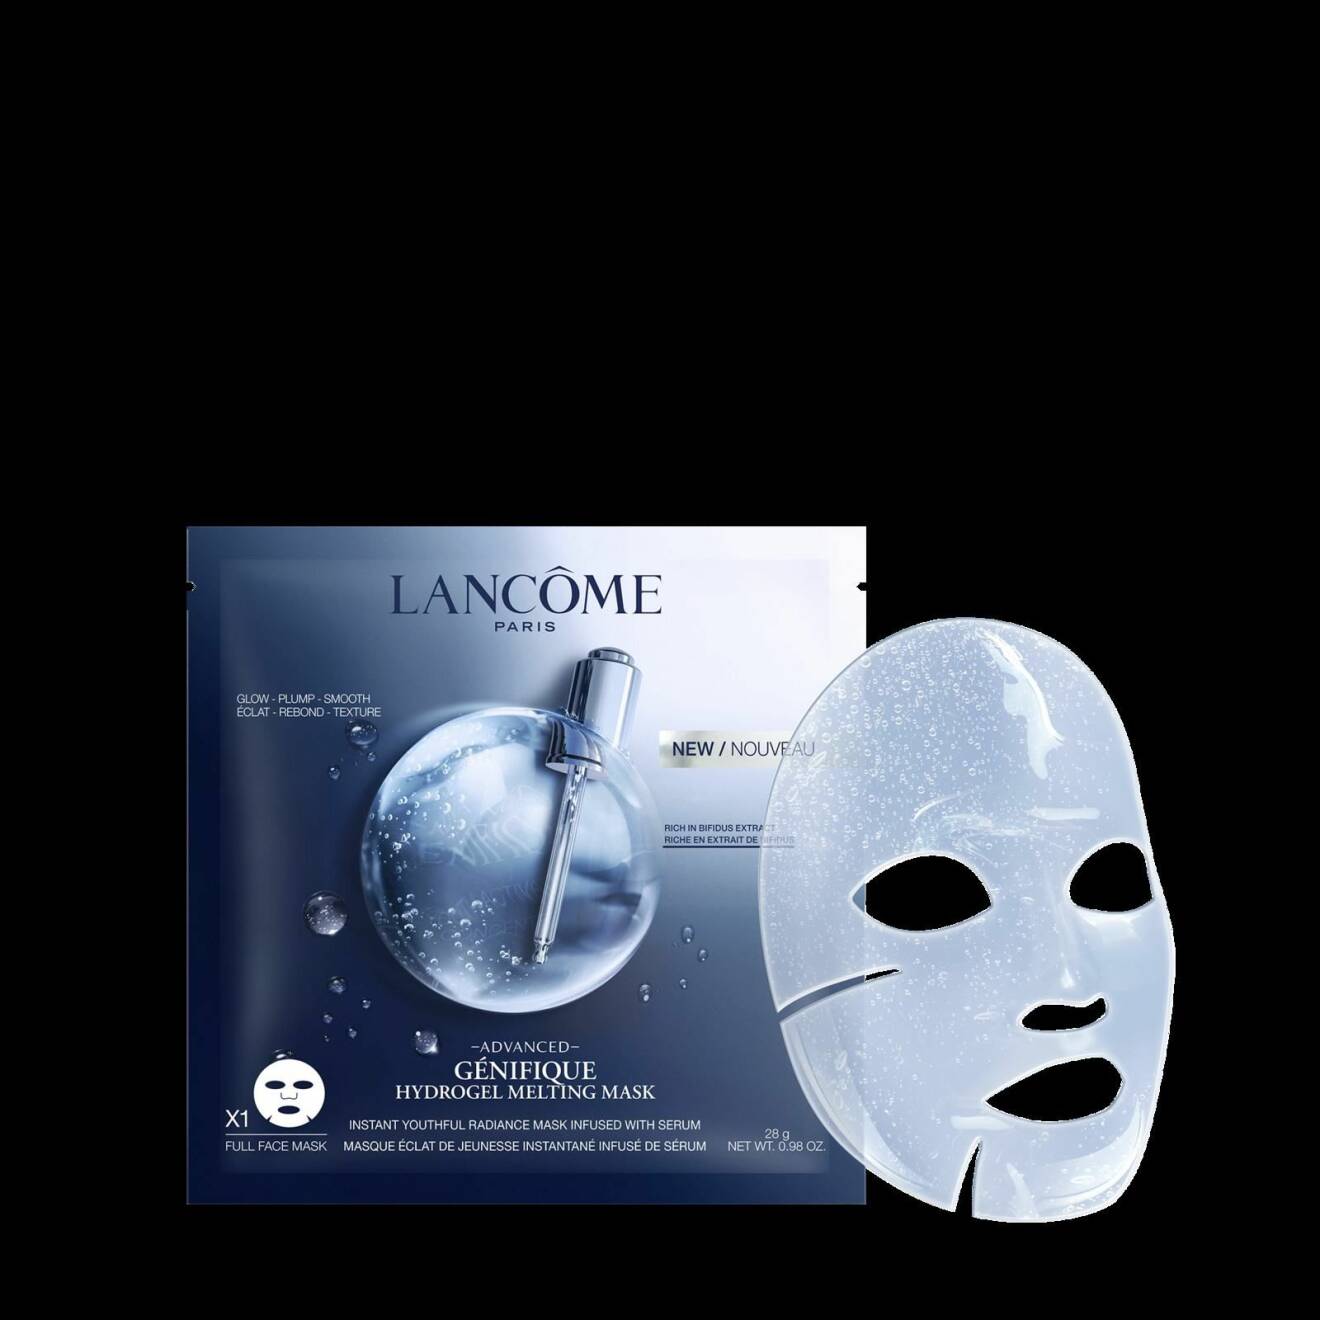 sheetmask från lancome